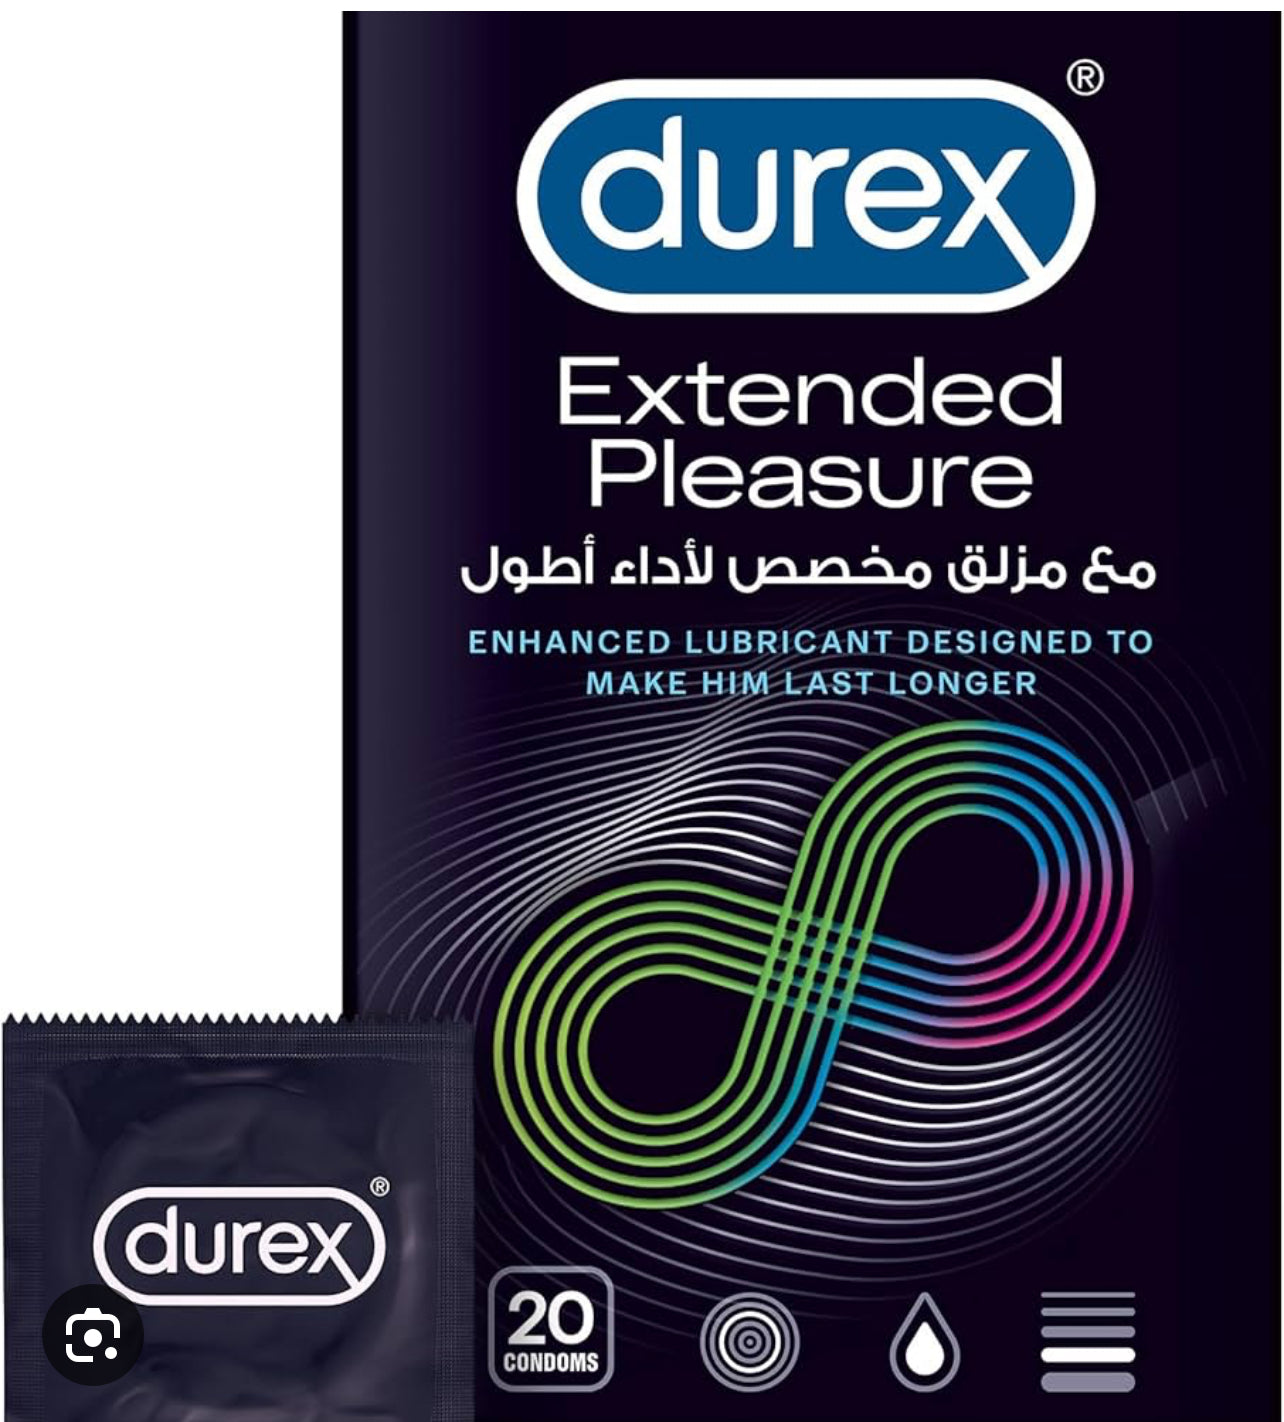 DUREX EXTENDED PLEASURE 20 pieces 